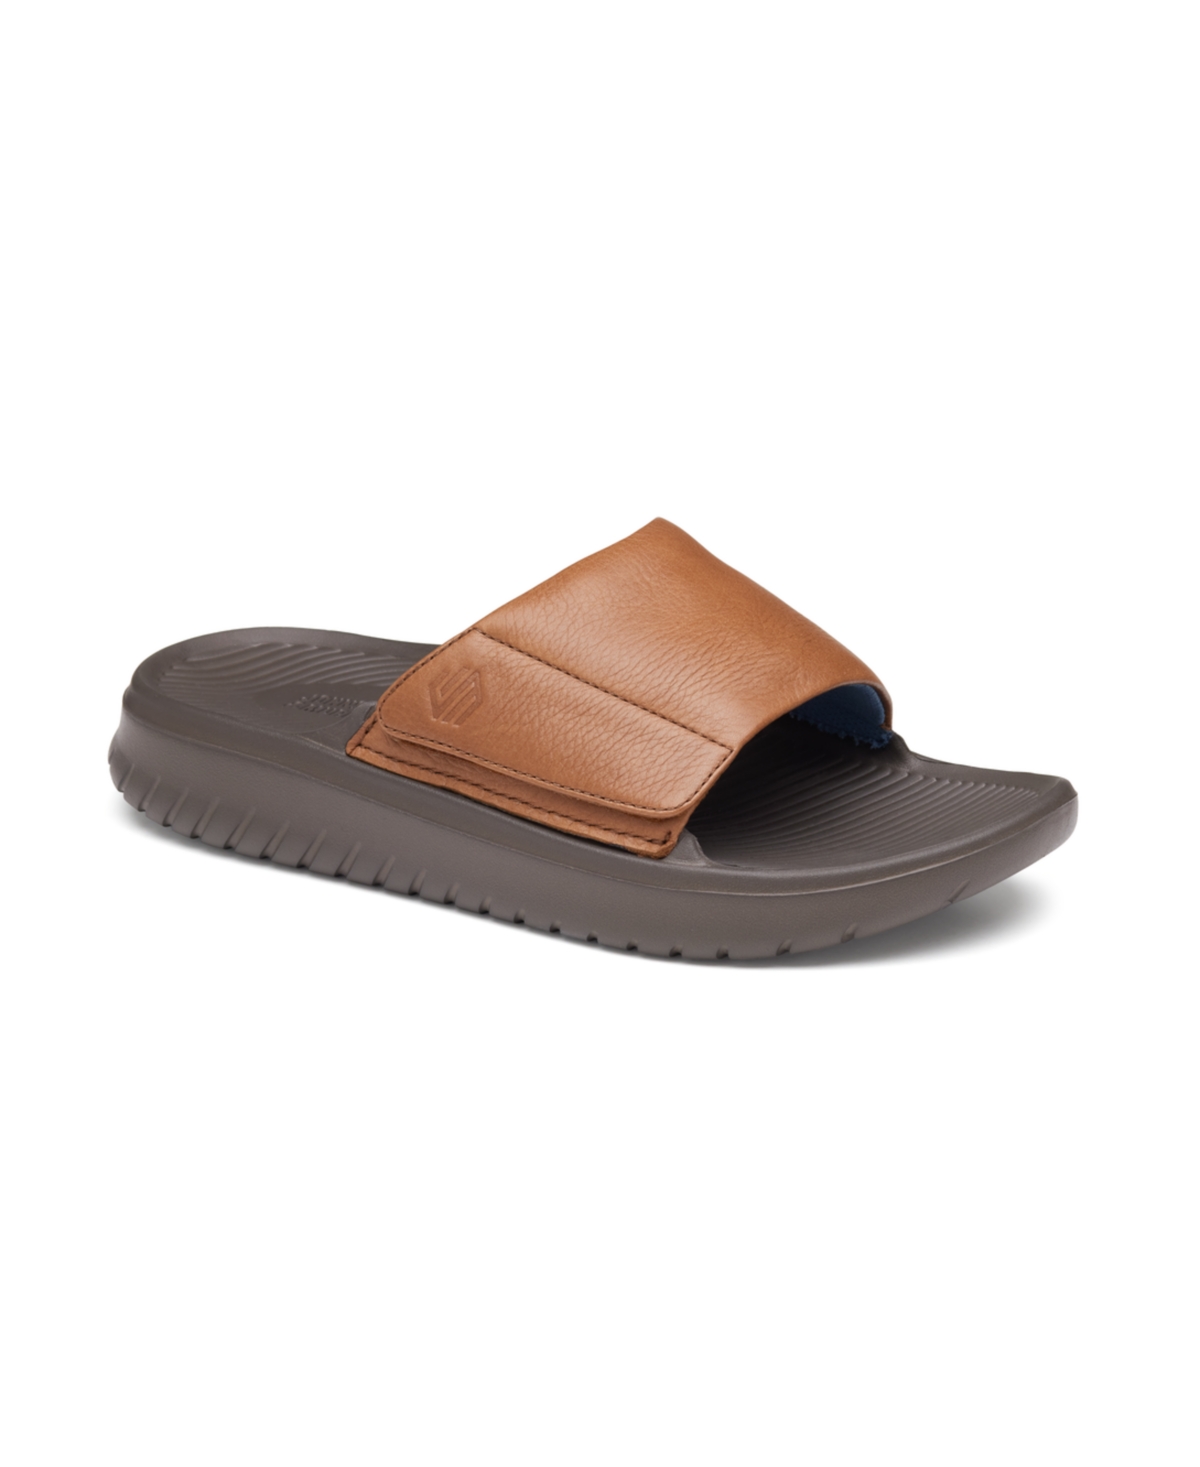 Men's Oasis Slide Sandals - Tan